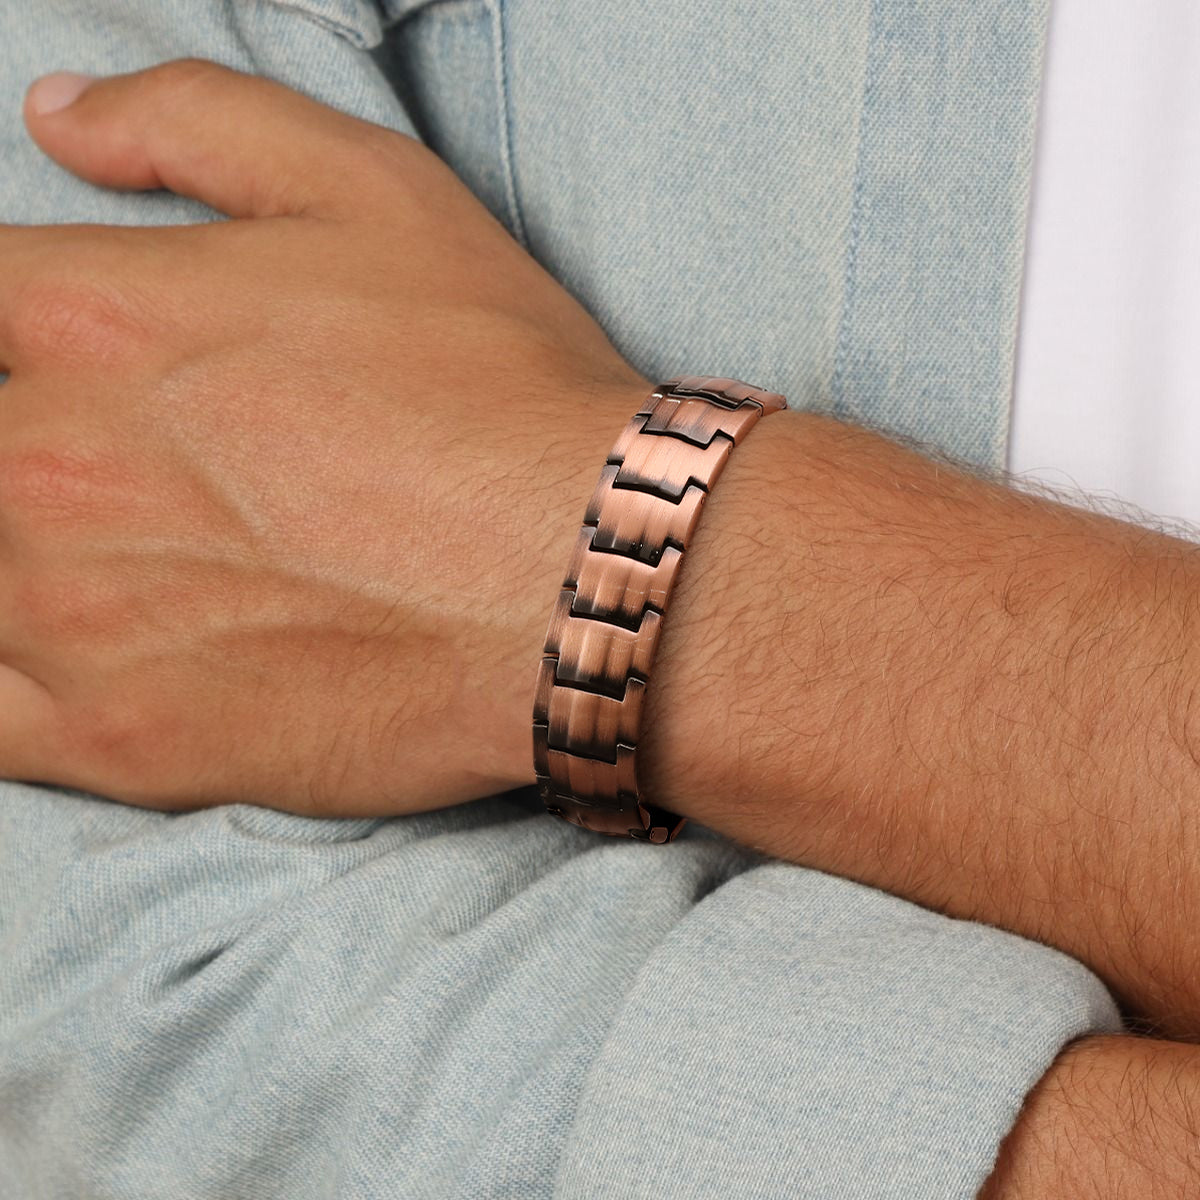 Double-Row Strong Men's Copper Magnetic Bracelet for Arthritis